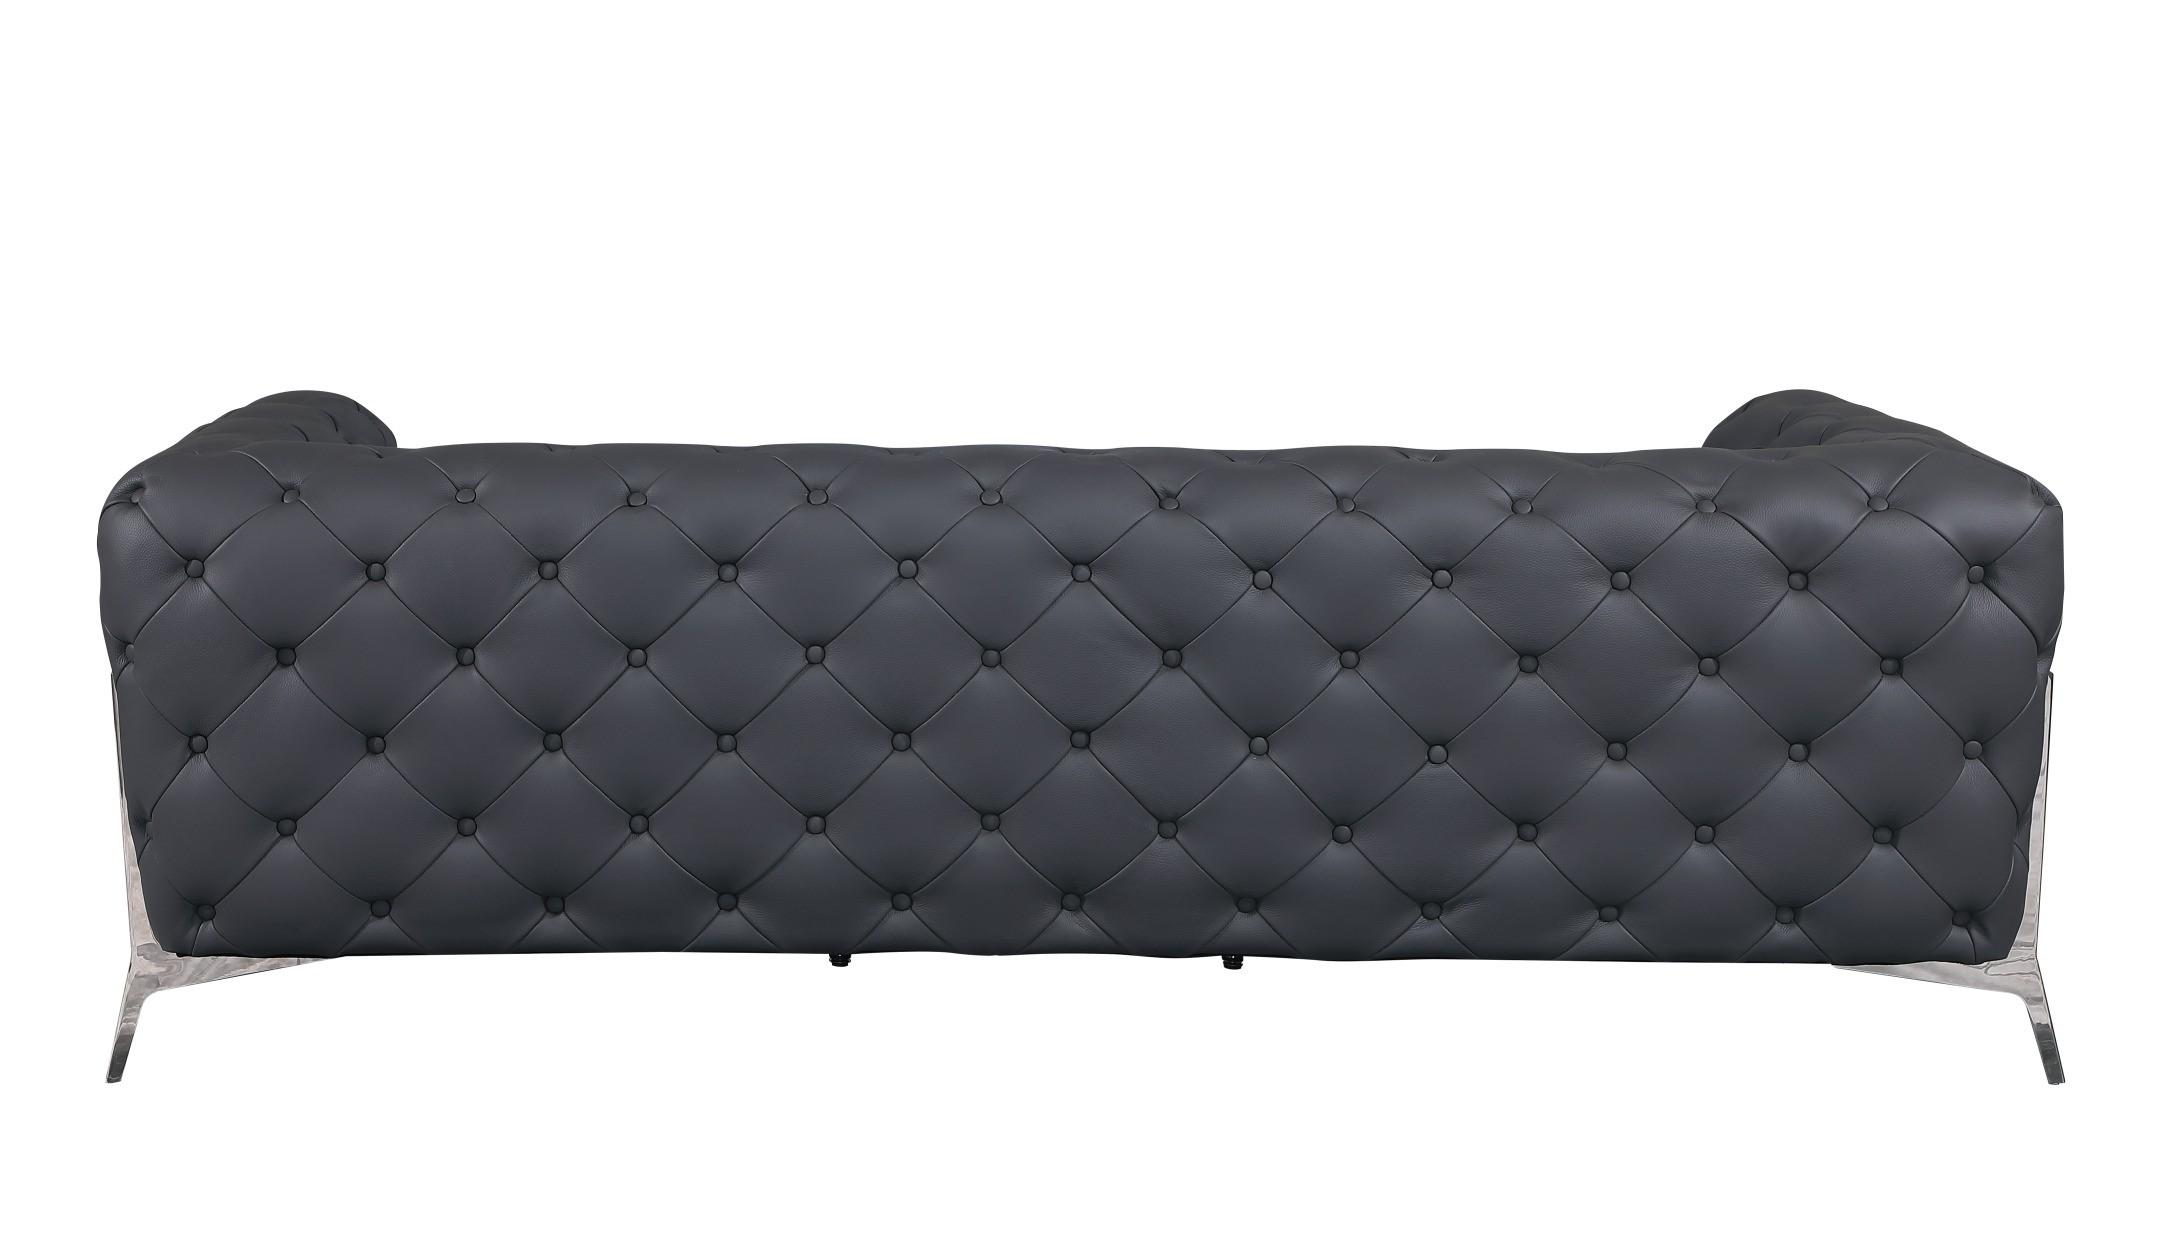 

    
Dark Gray Genuine Italian Leather Sofa Set 3Pcs Contemporary 970 Global United
